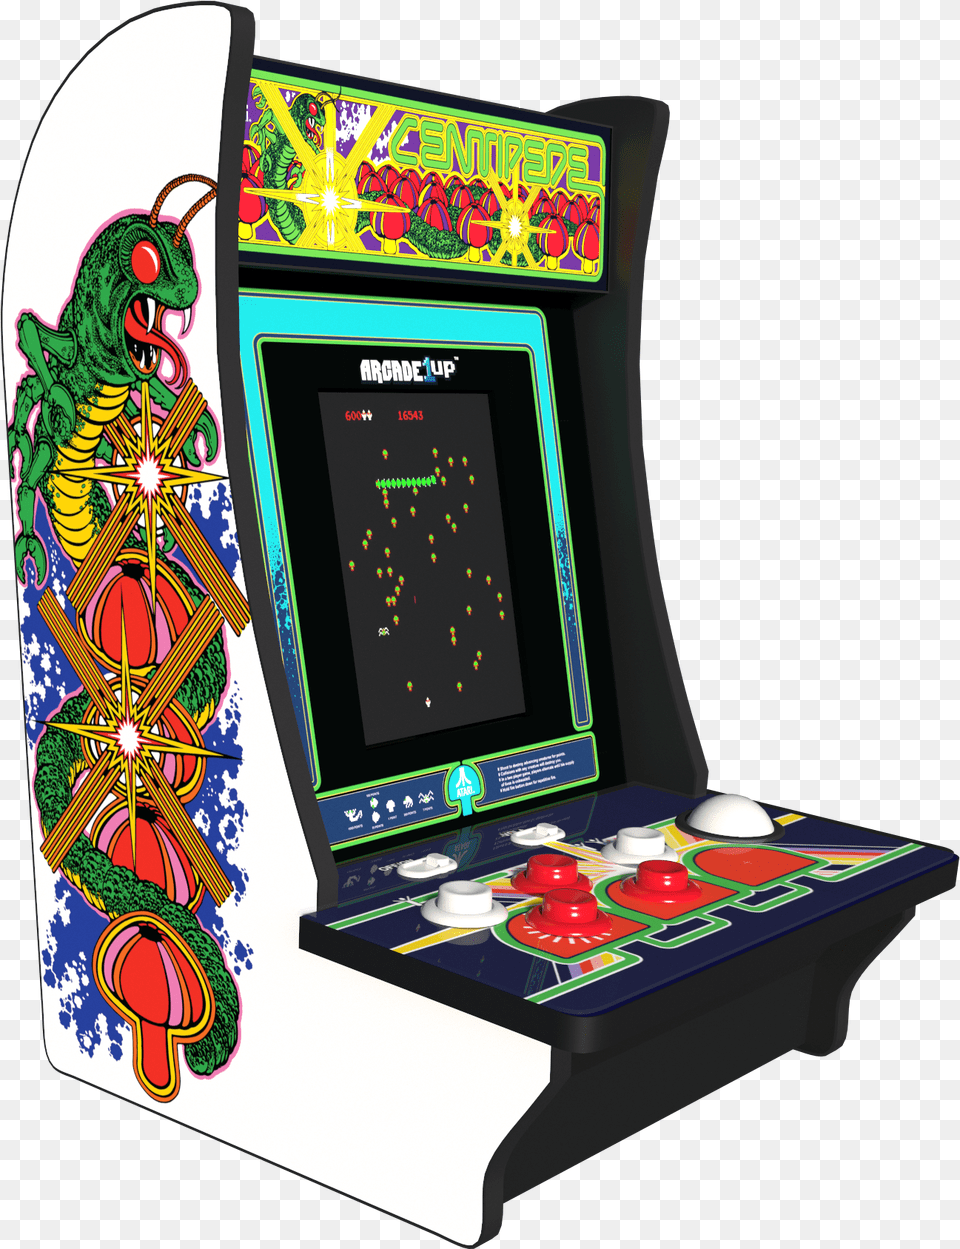 Transparent Centipede Arcade Centipede Arcade Game, Arcade Game Machine Free Png Download